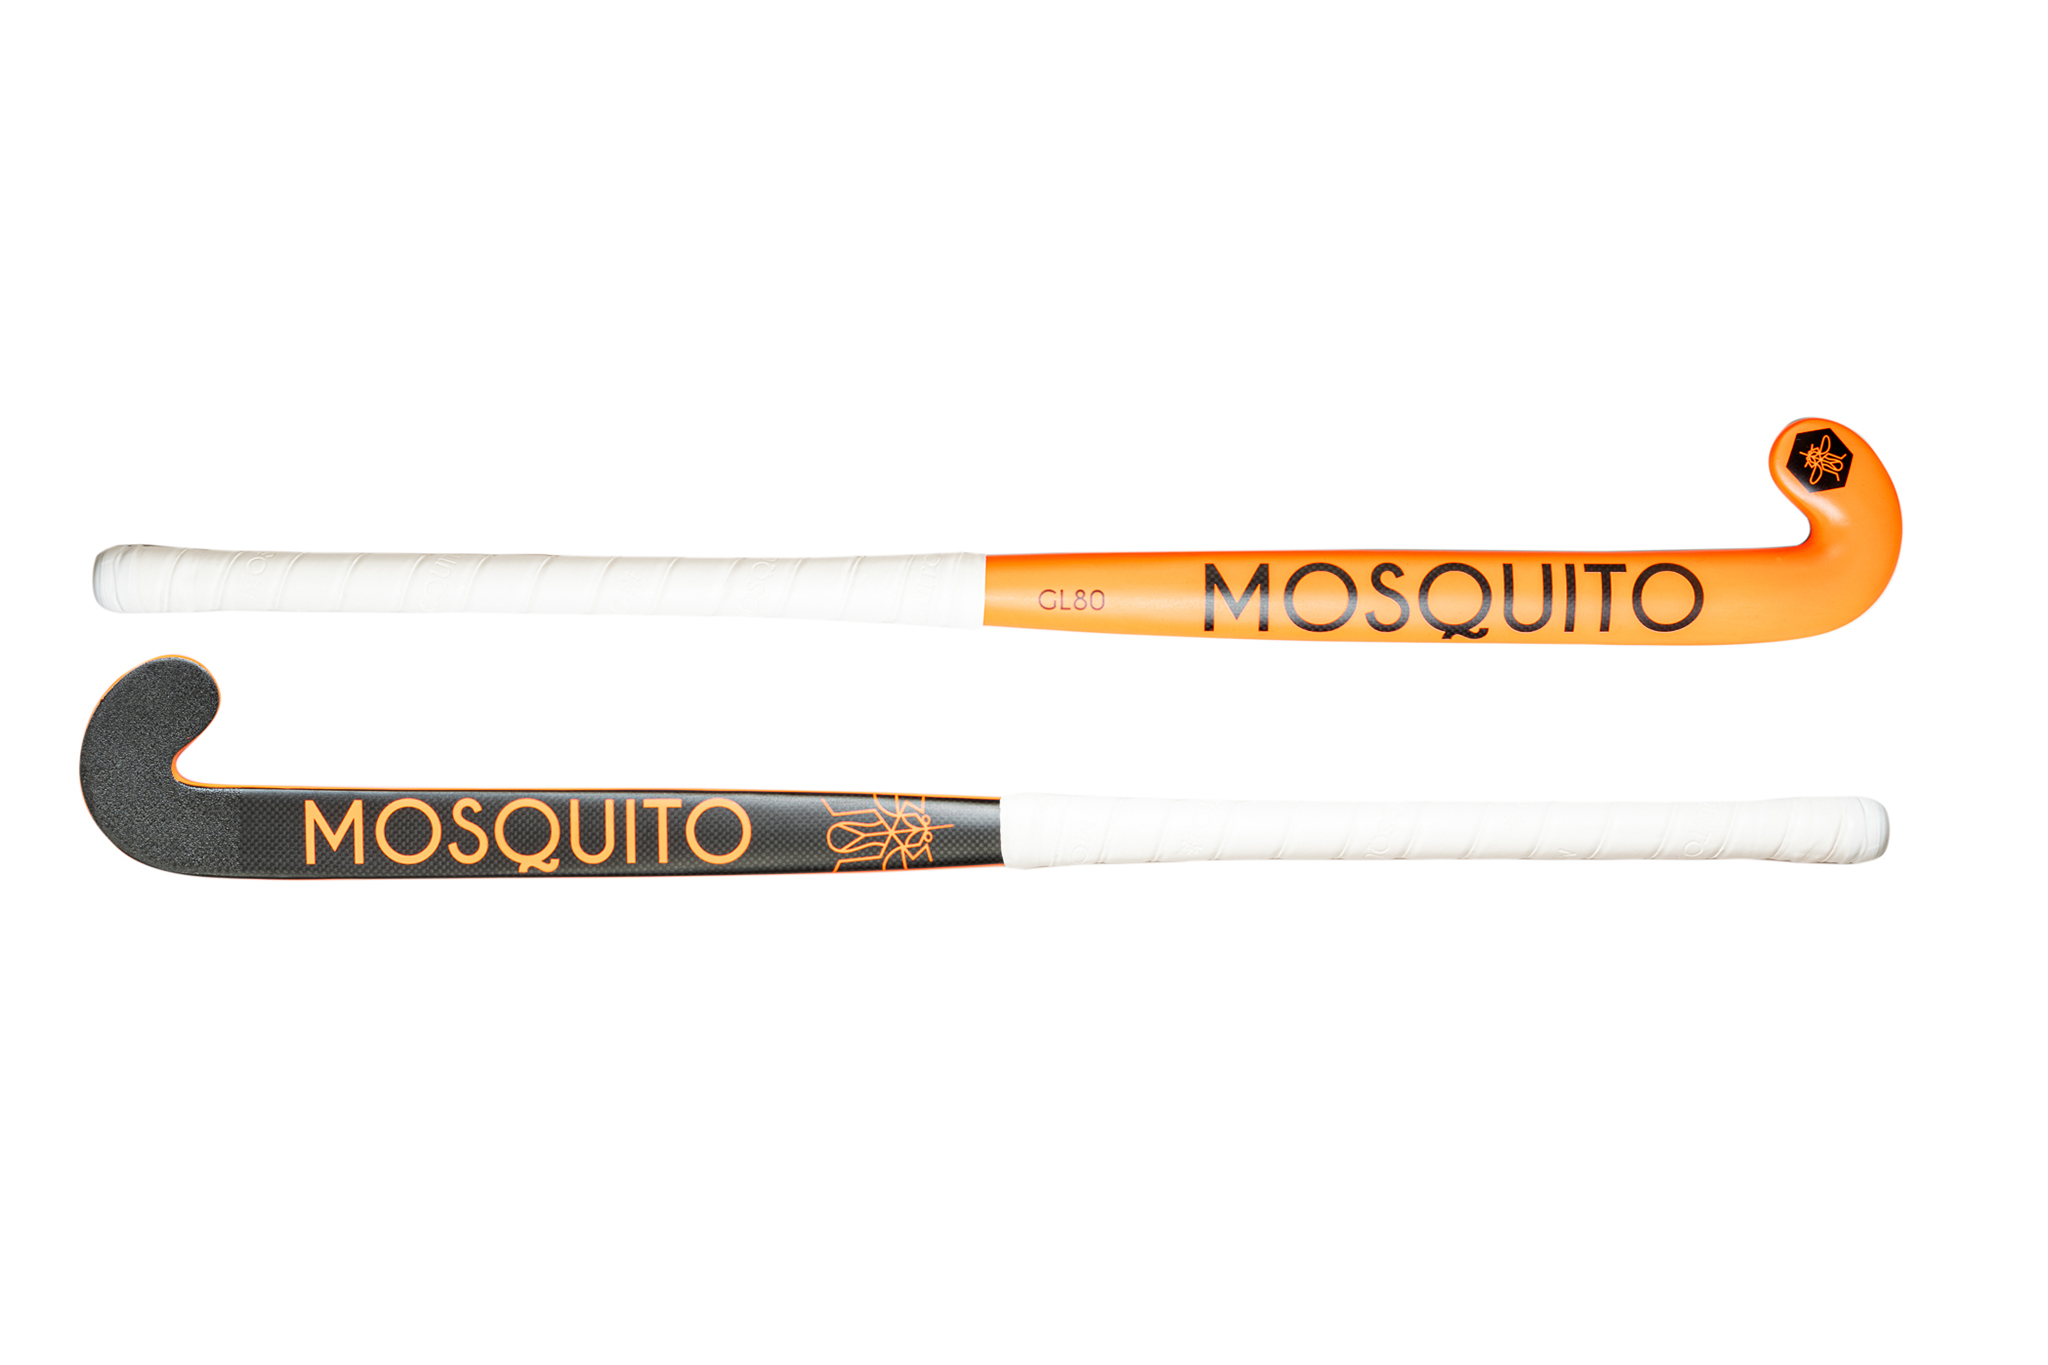 Mosquito GL 80 '20/'21